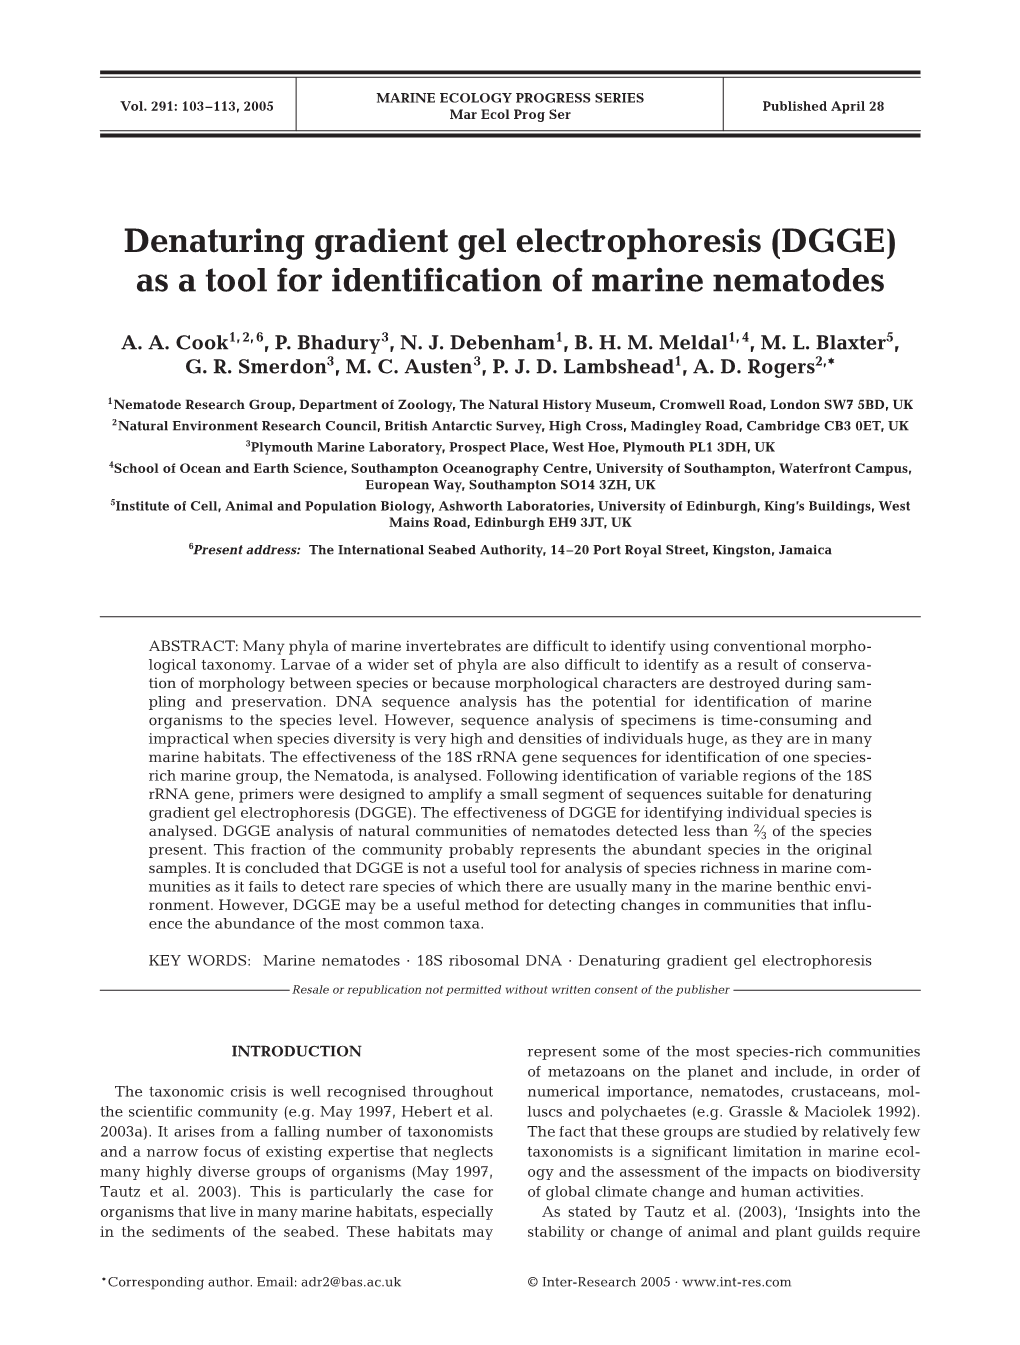 Denaturing Gradient Gel Electrophoresis (DGGE) As a Tool for Identification of Marine Nematodes